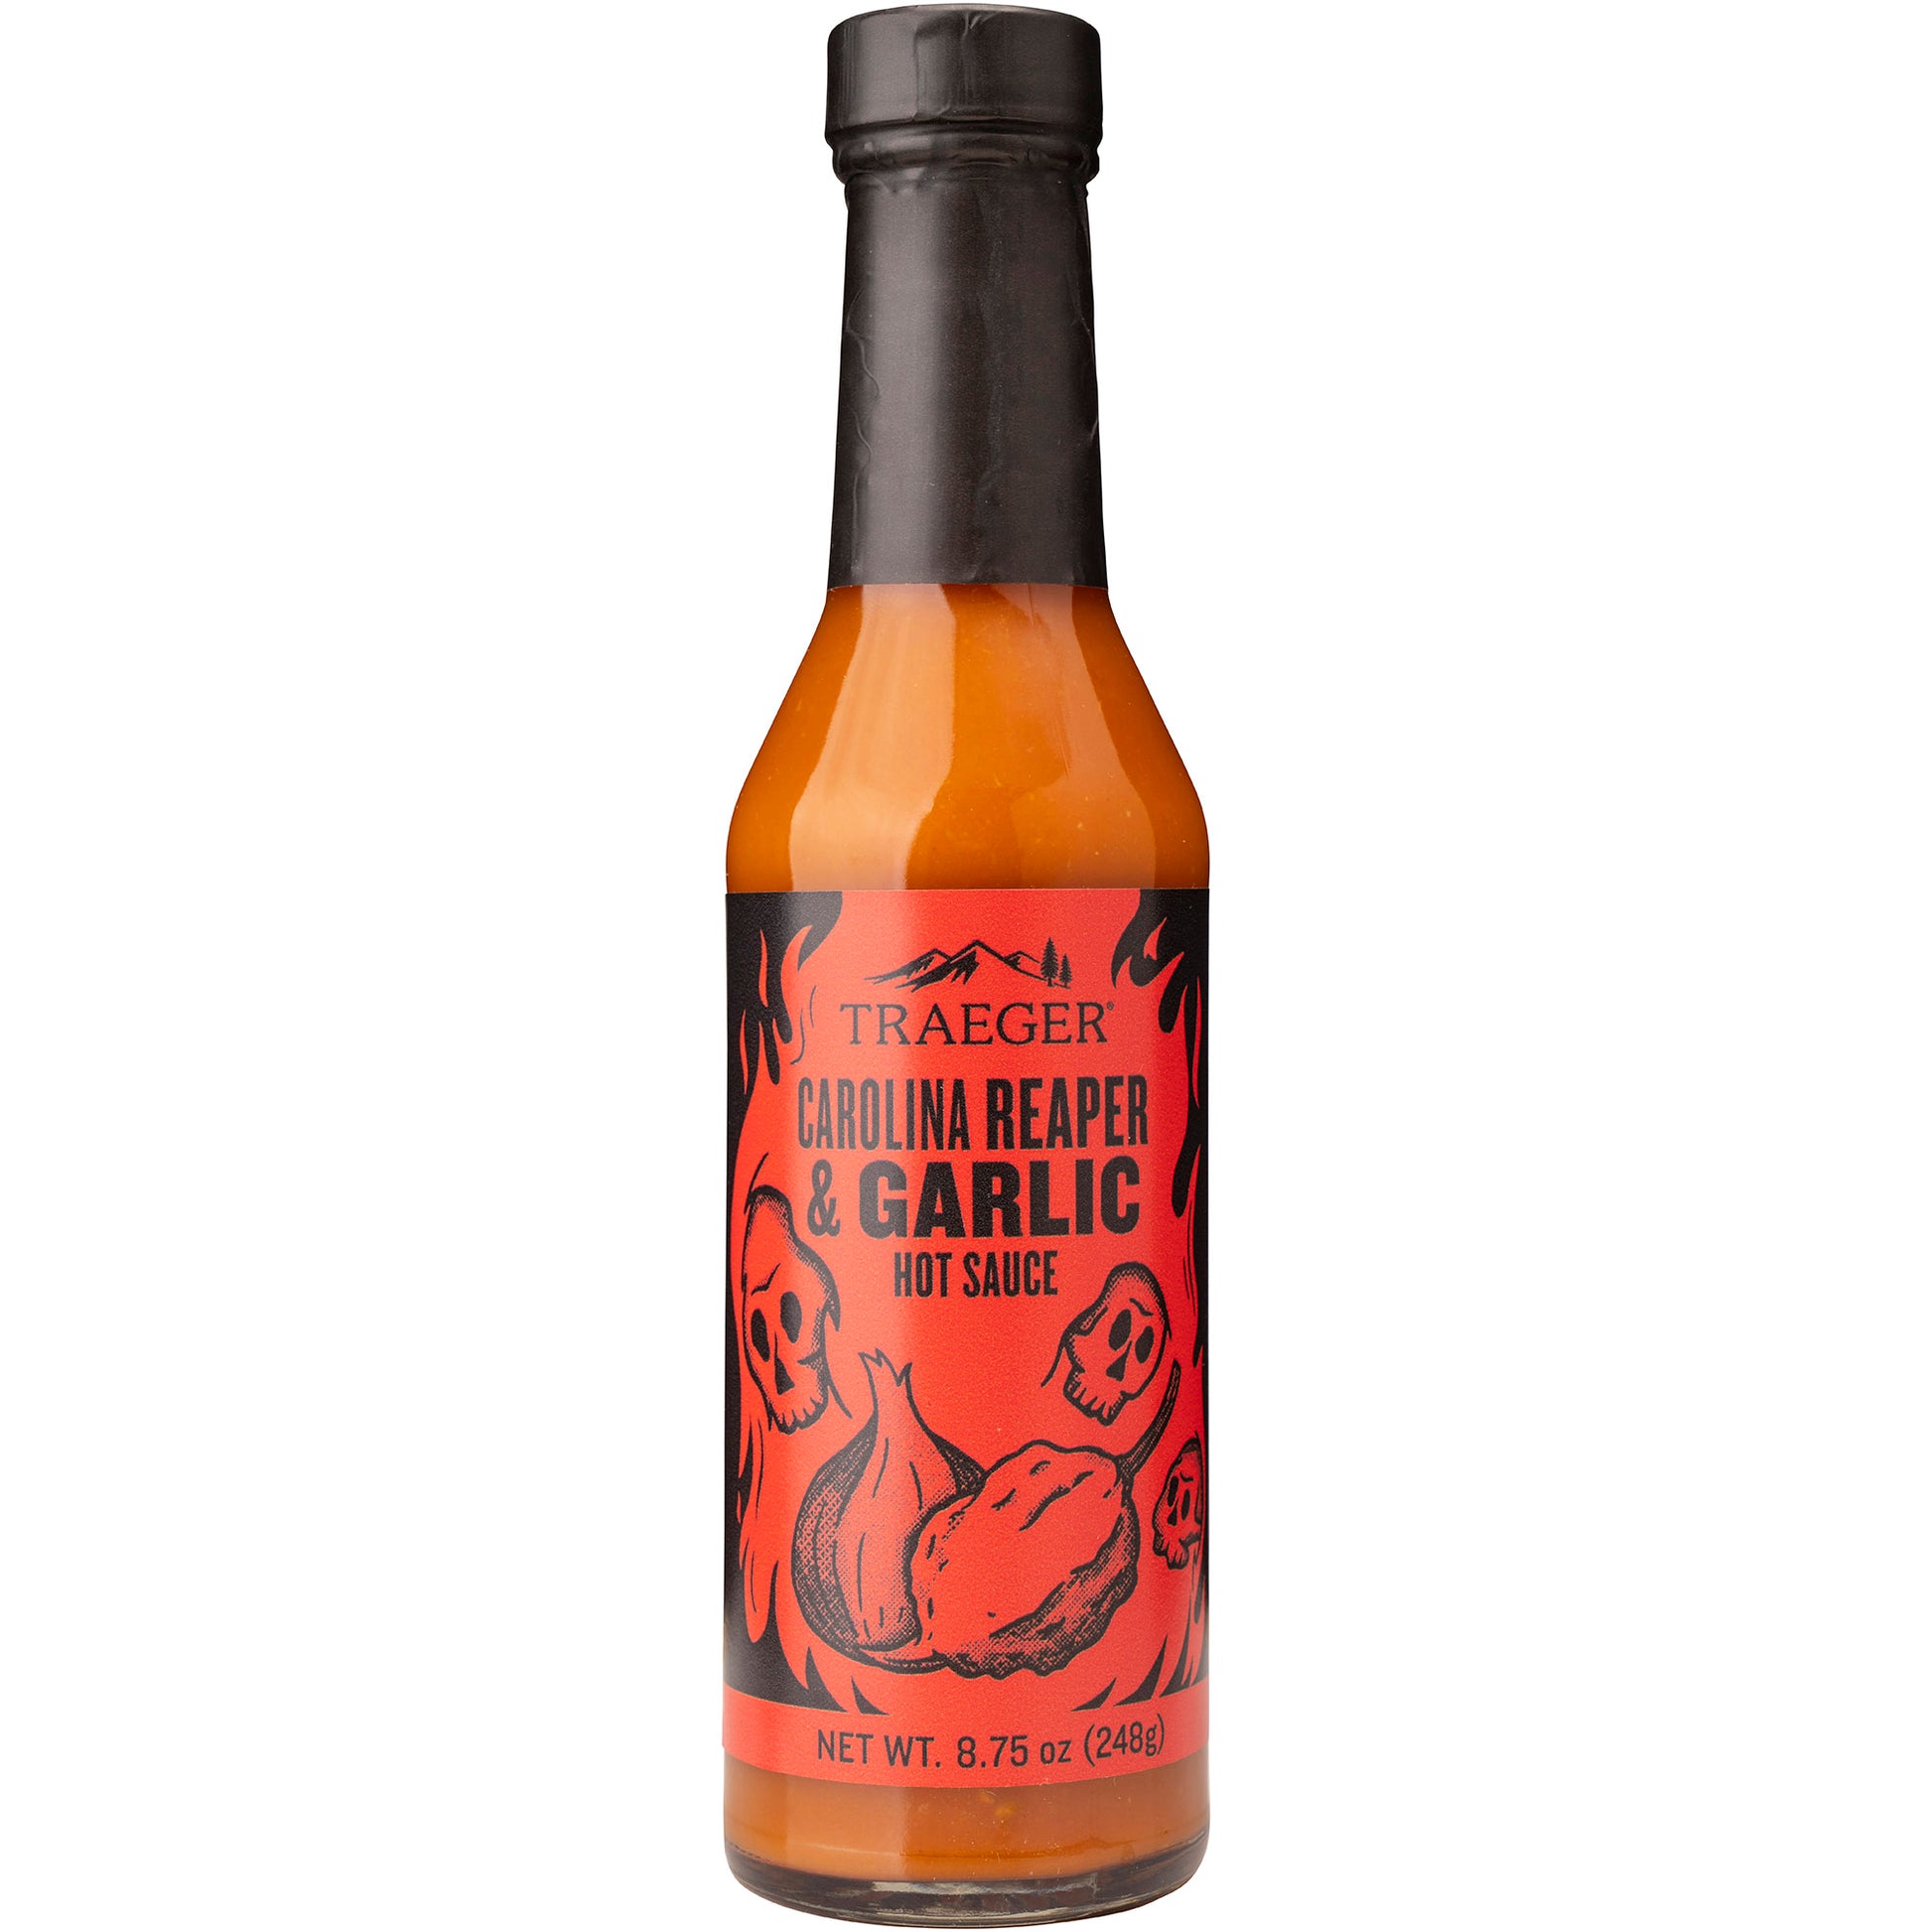 Traeger Carolina Reaper & Garlic hot sauce is packaged in a sealed bottle. Net wt. 8.75 oz.